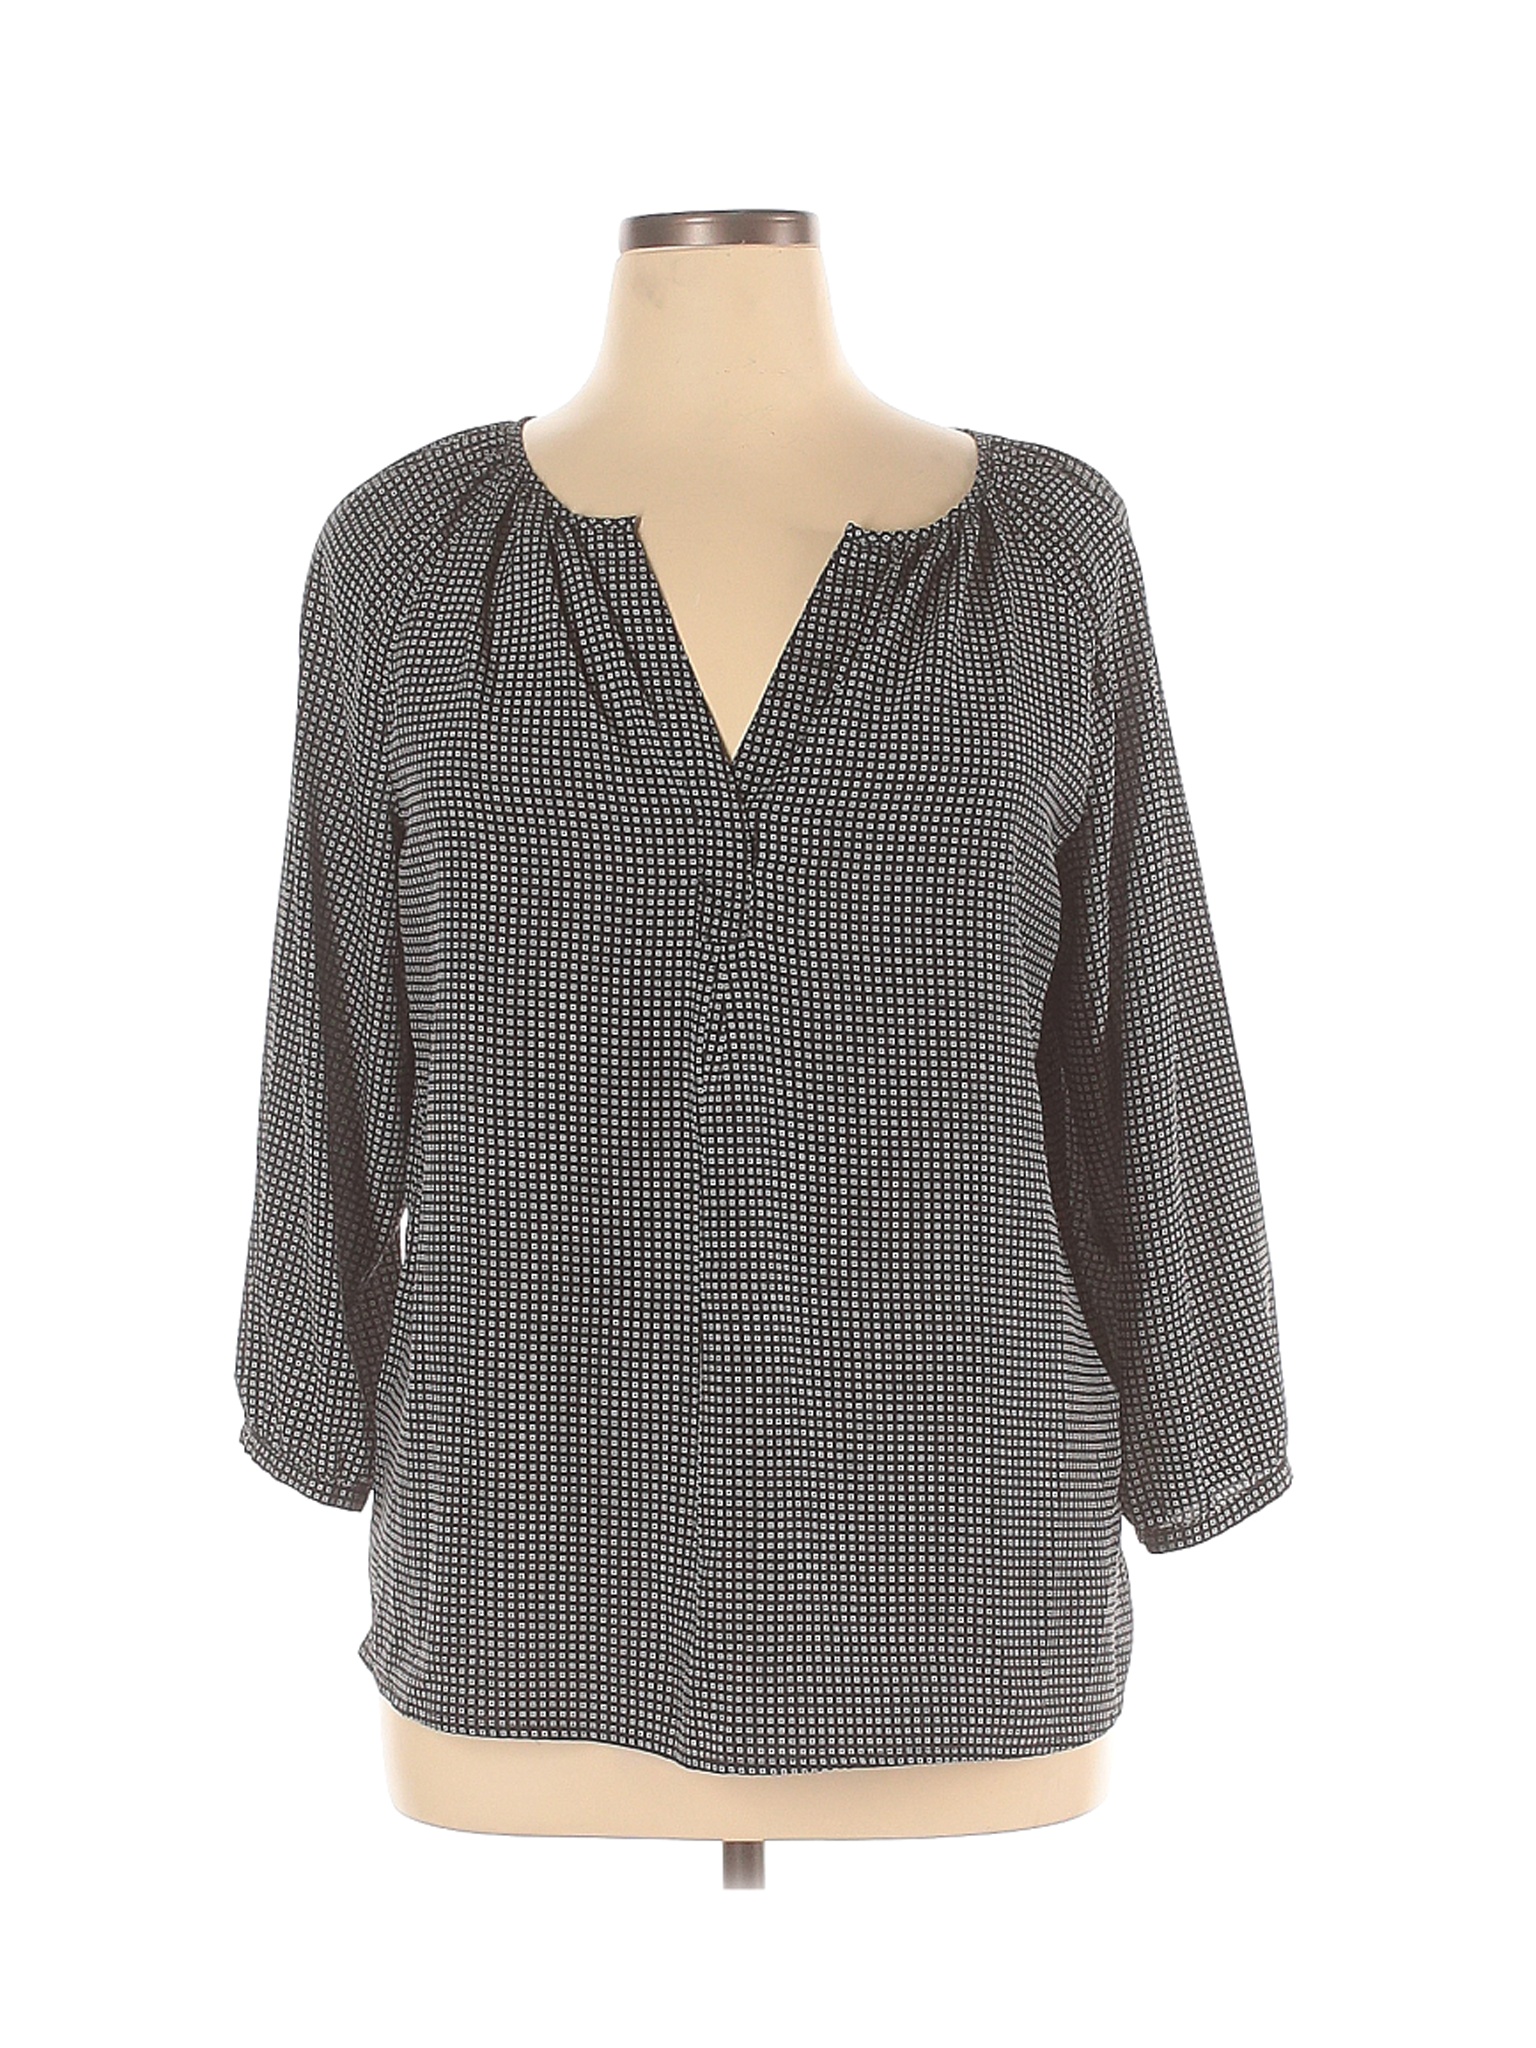 Violet & Claire Women Gray 3/4 Sleeve Blouse XL | eBay